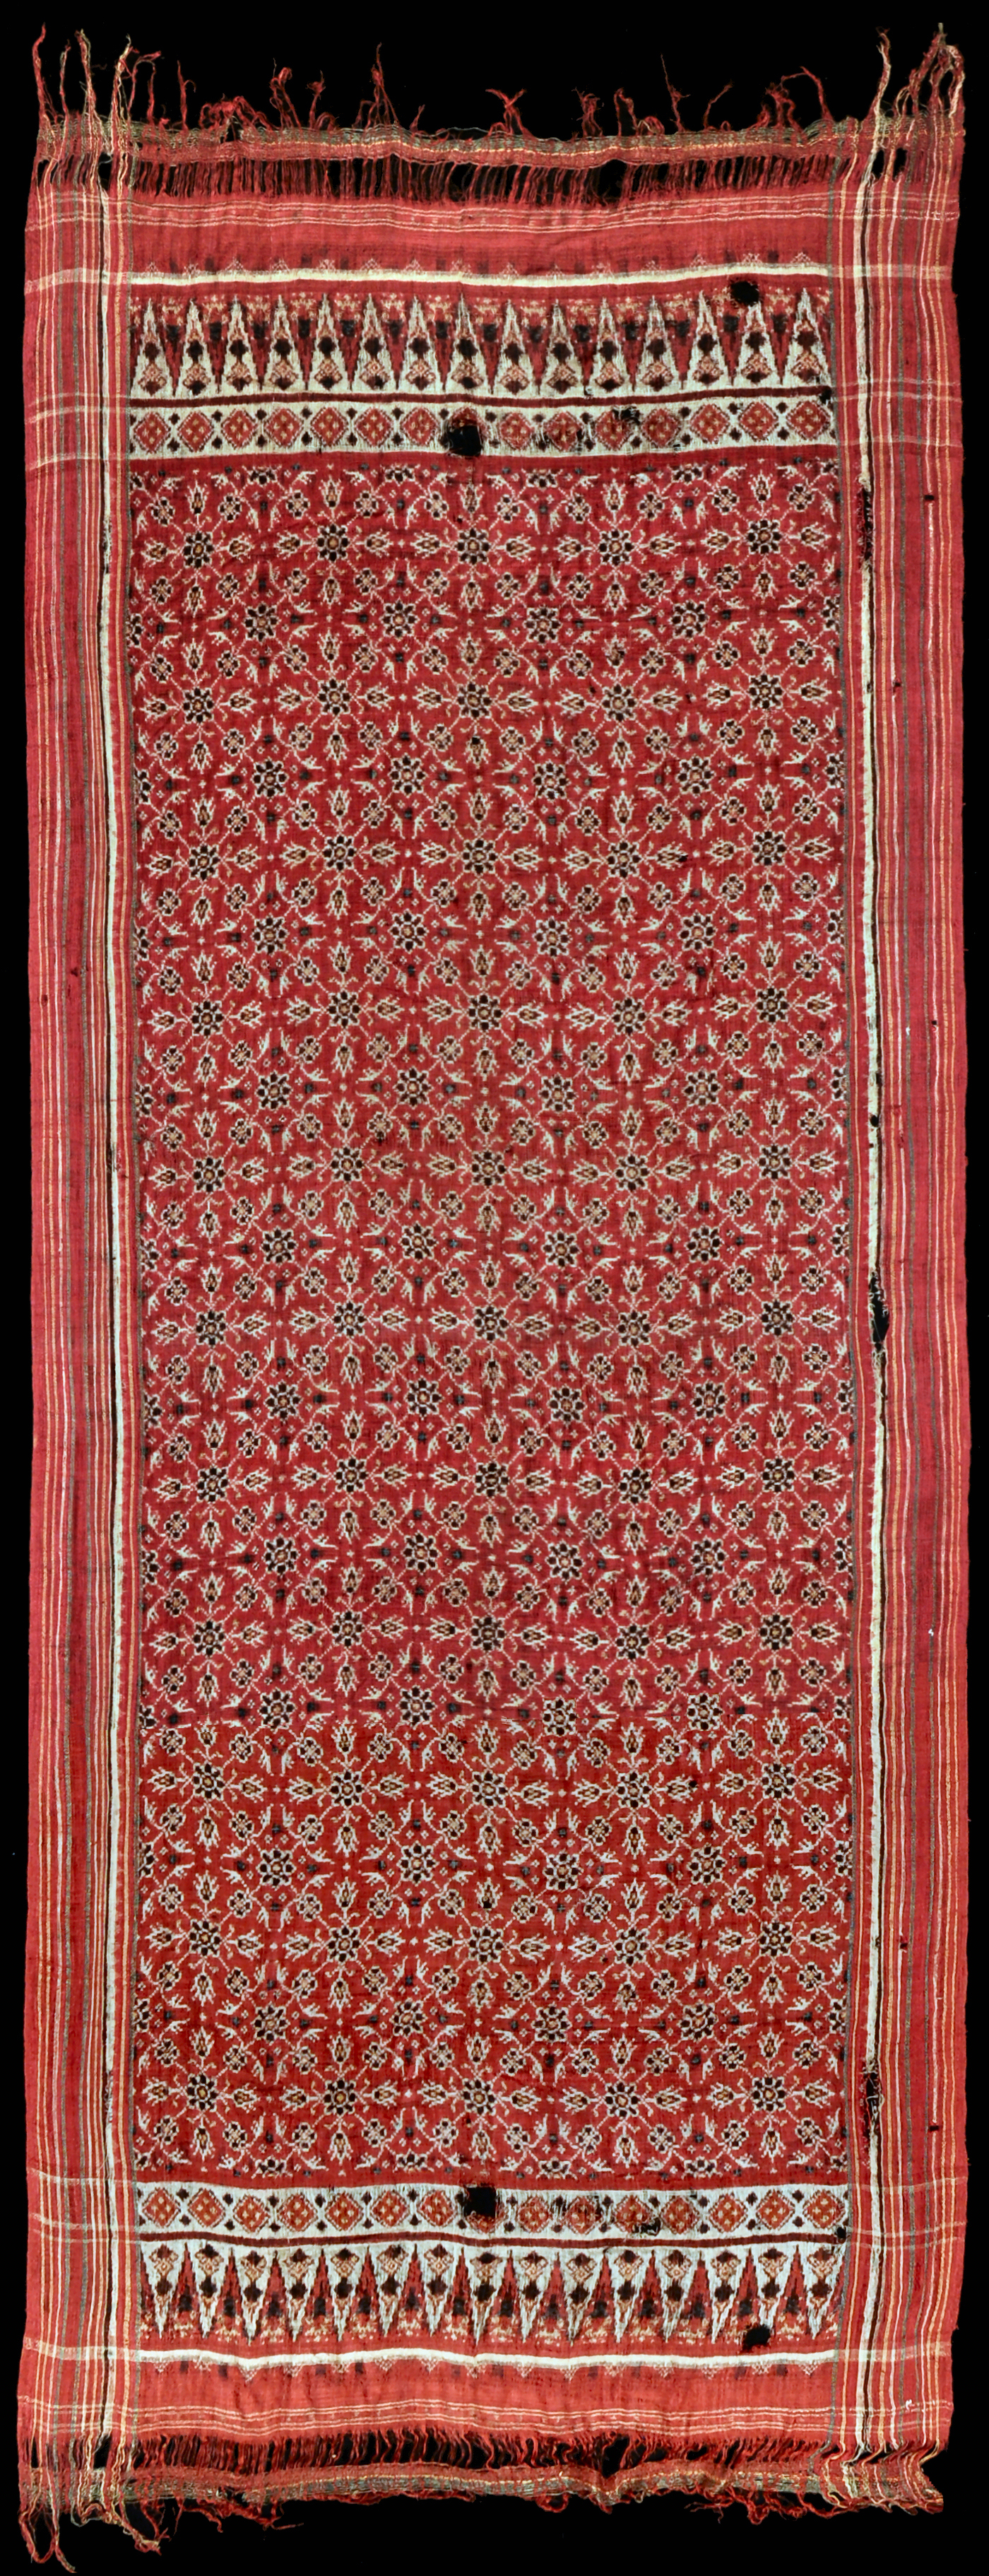 Ikat from Gujarat, India, Indonesia